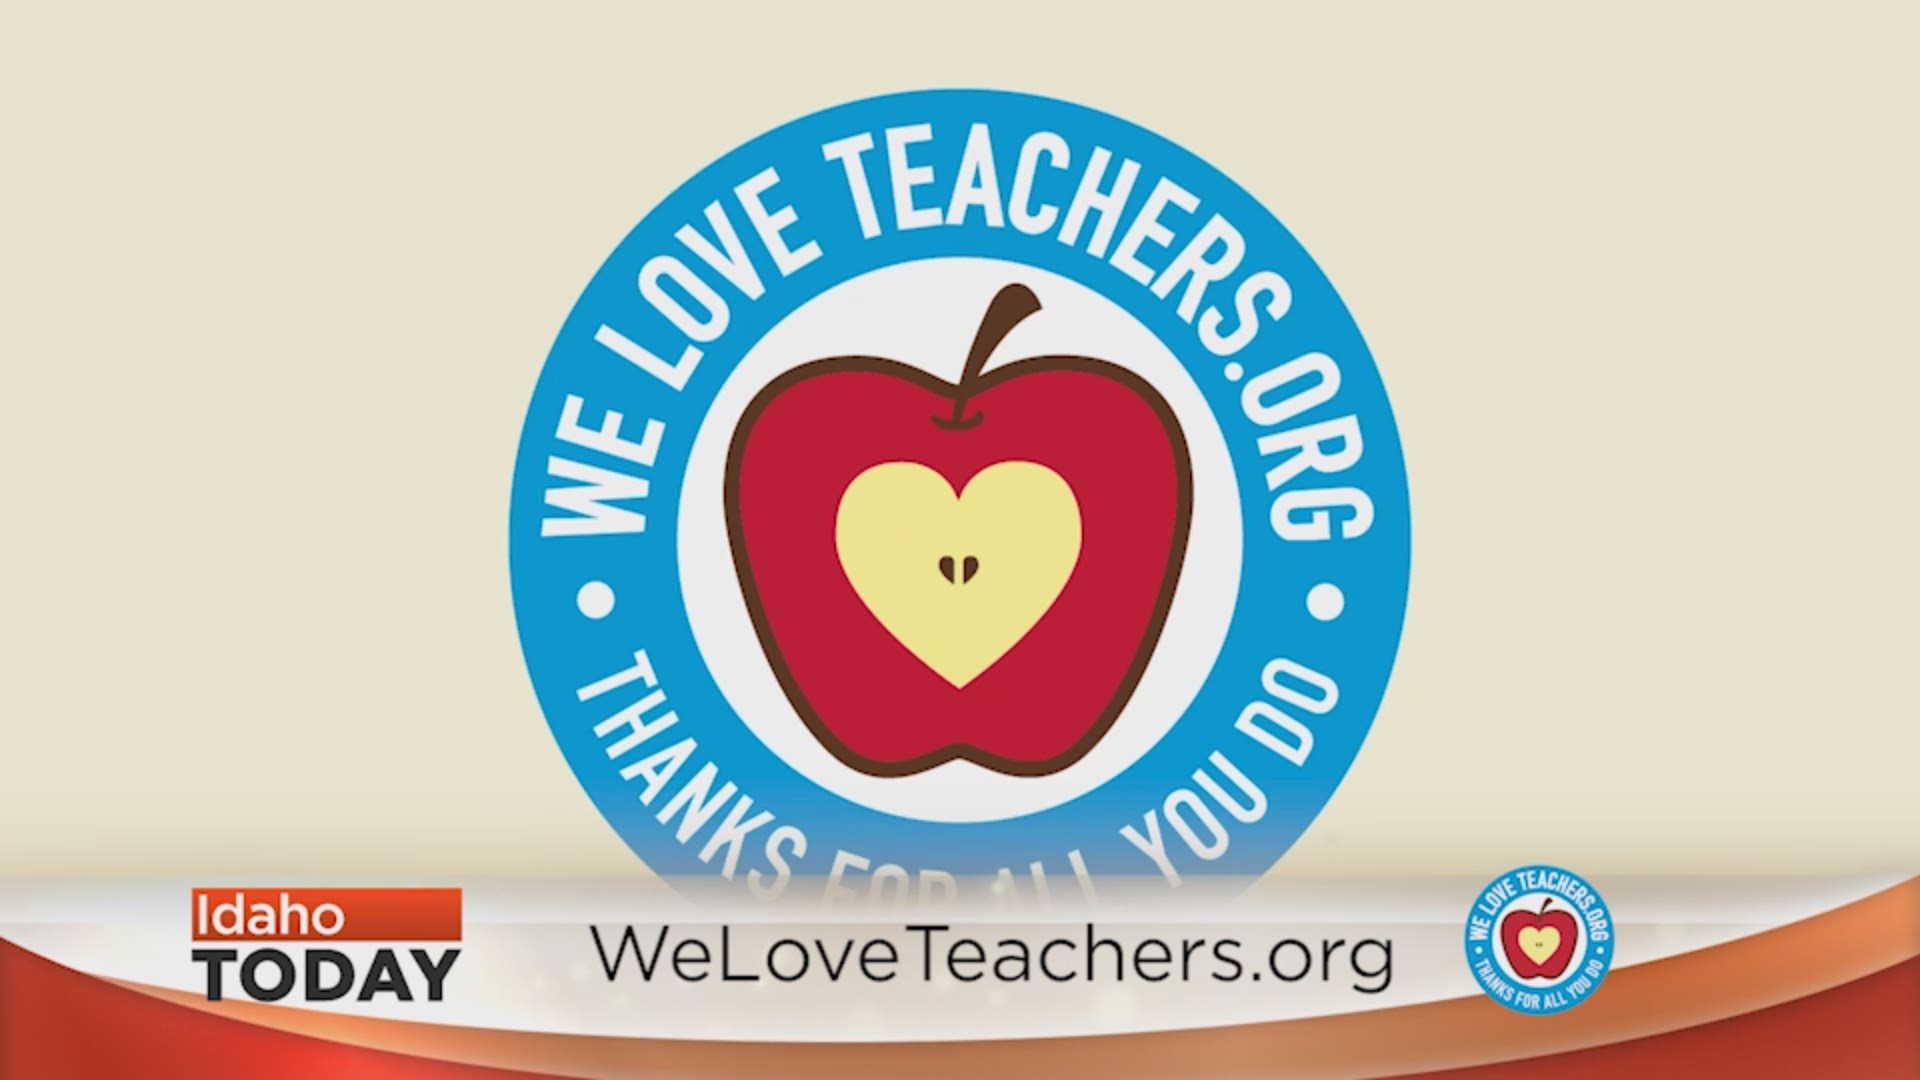 Idaho Today: Cap Ed "We Love Teachers"